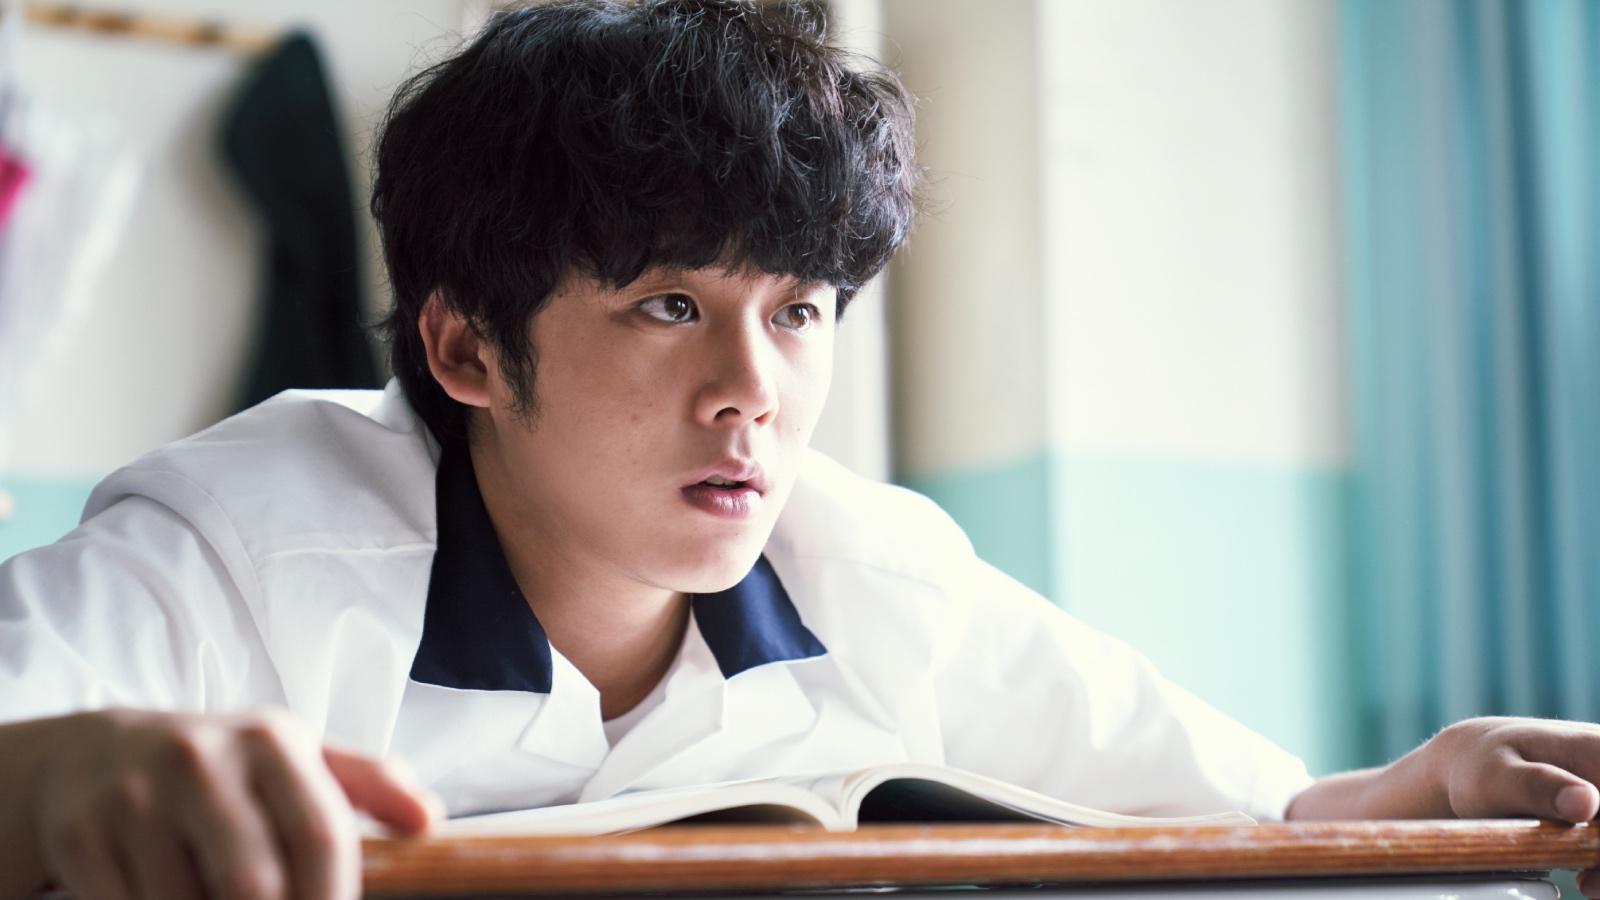 Moving K-drama stars Lee Jung-ha as the webtoon character Bong-seok.